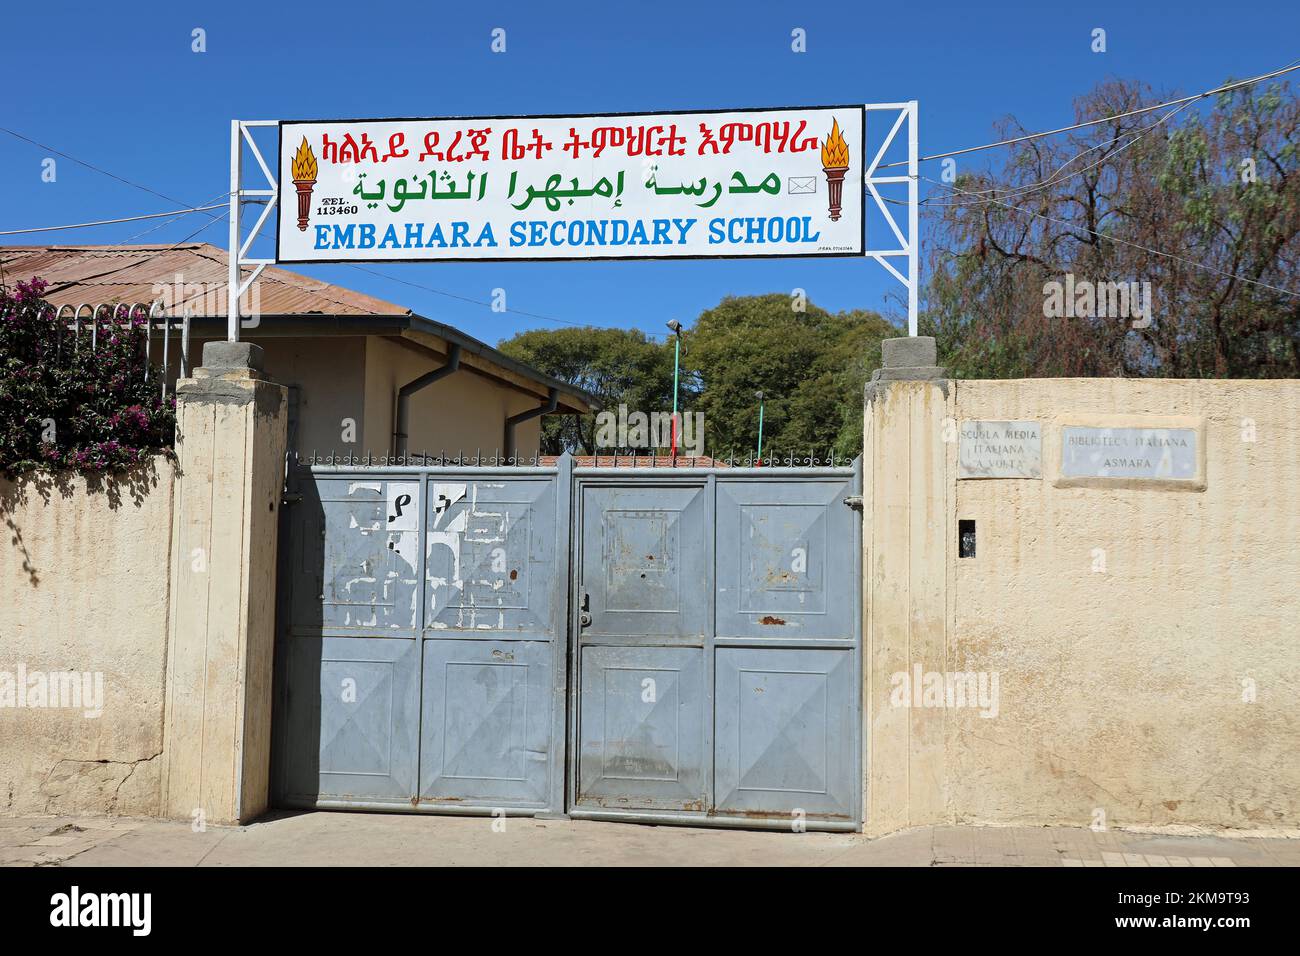 Embhara Secondary School at Asmara in Eritrea Stock Photo